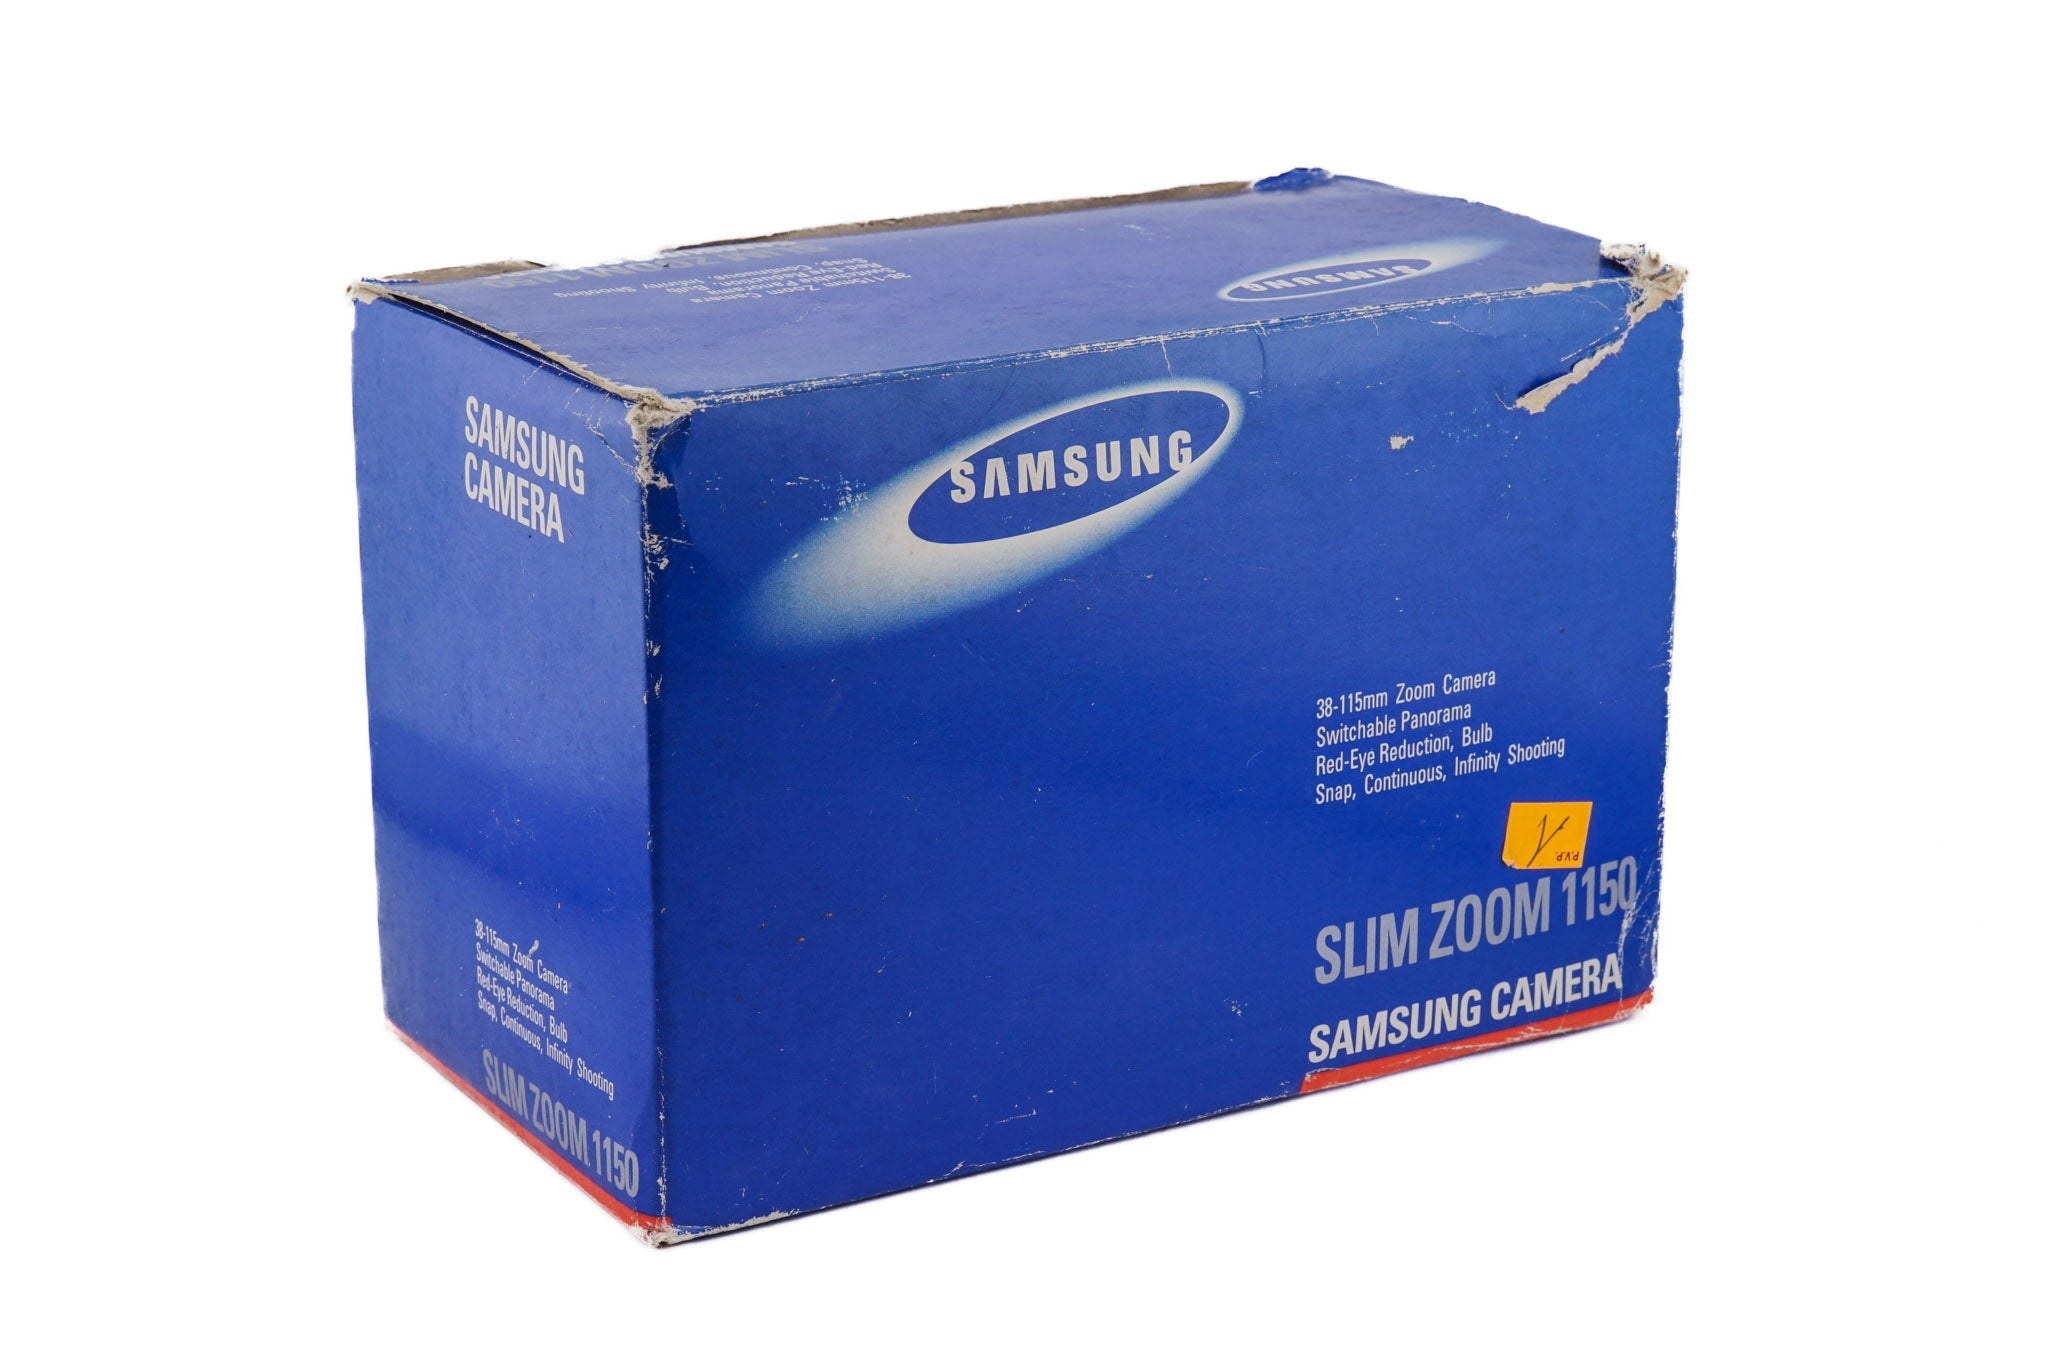 Samsung Slim Zoom 1150